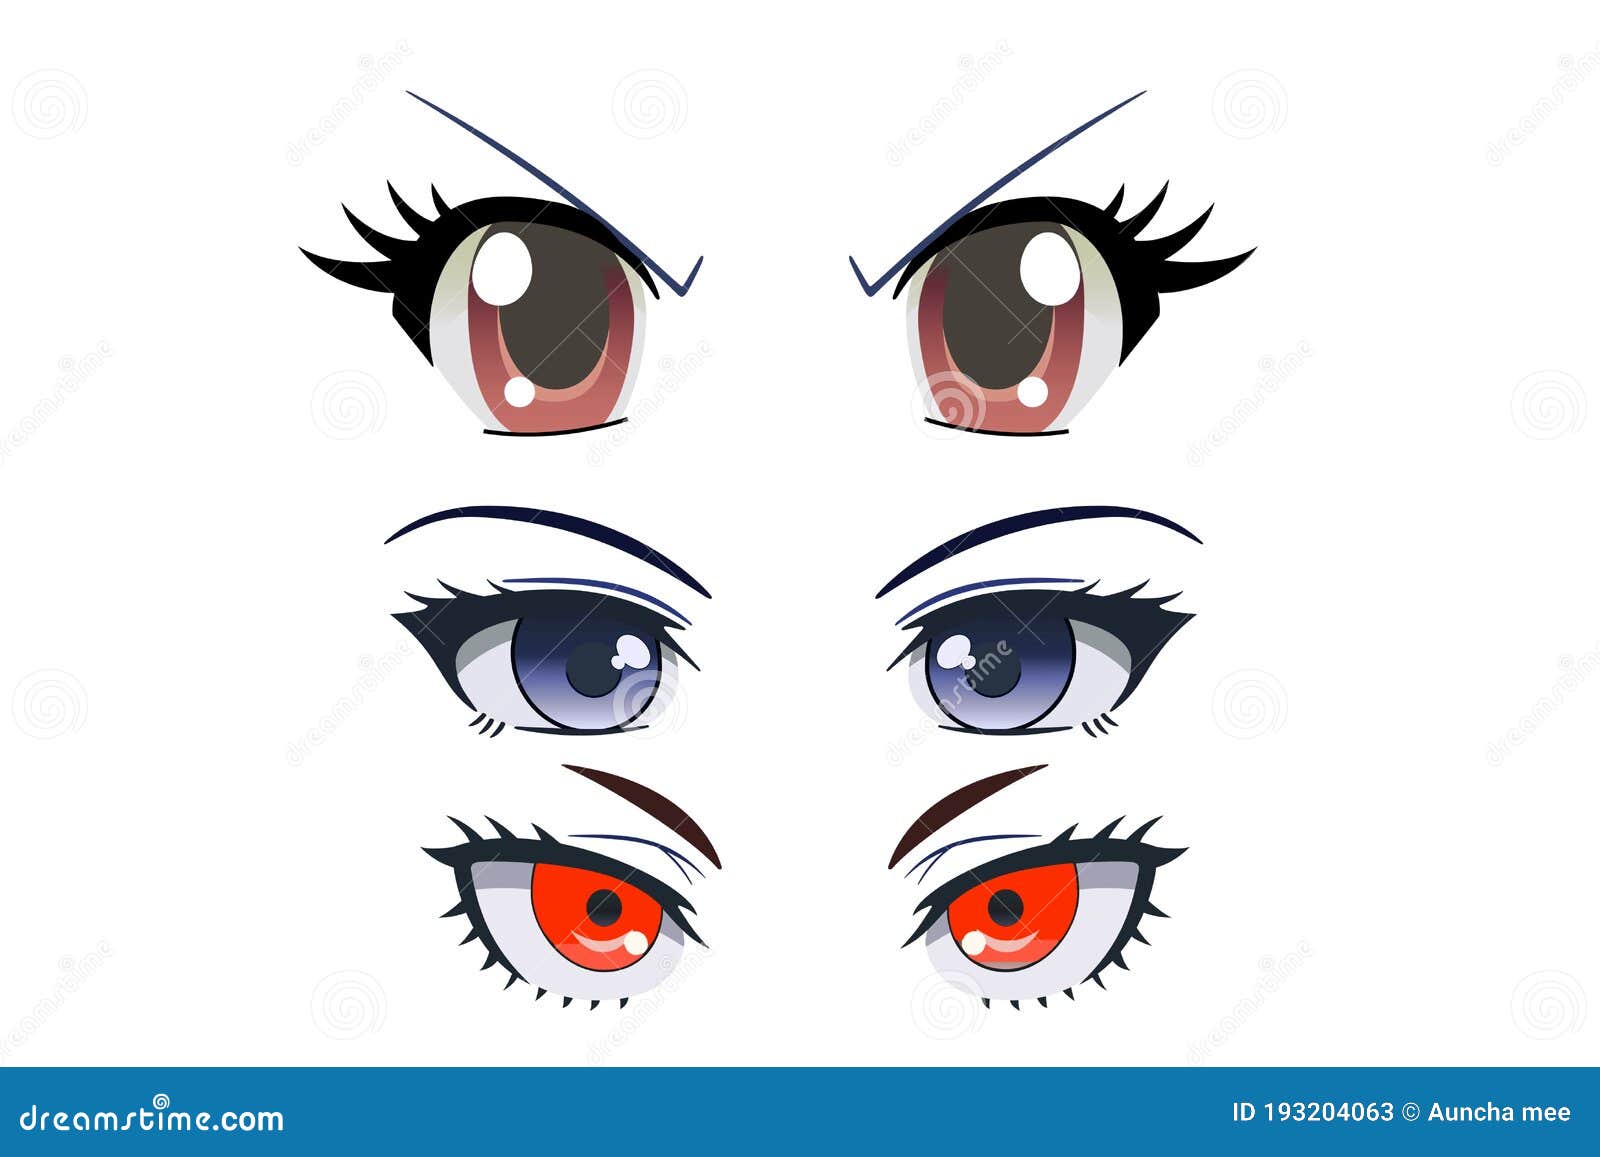 Anime Eyes Stock Illustrations – 13,594 Anime Eyes Stock